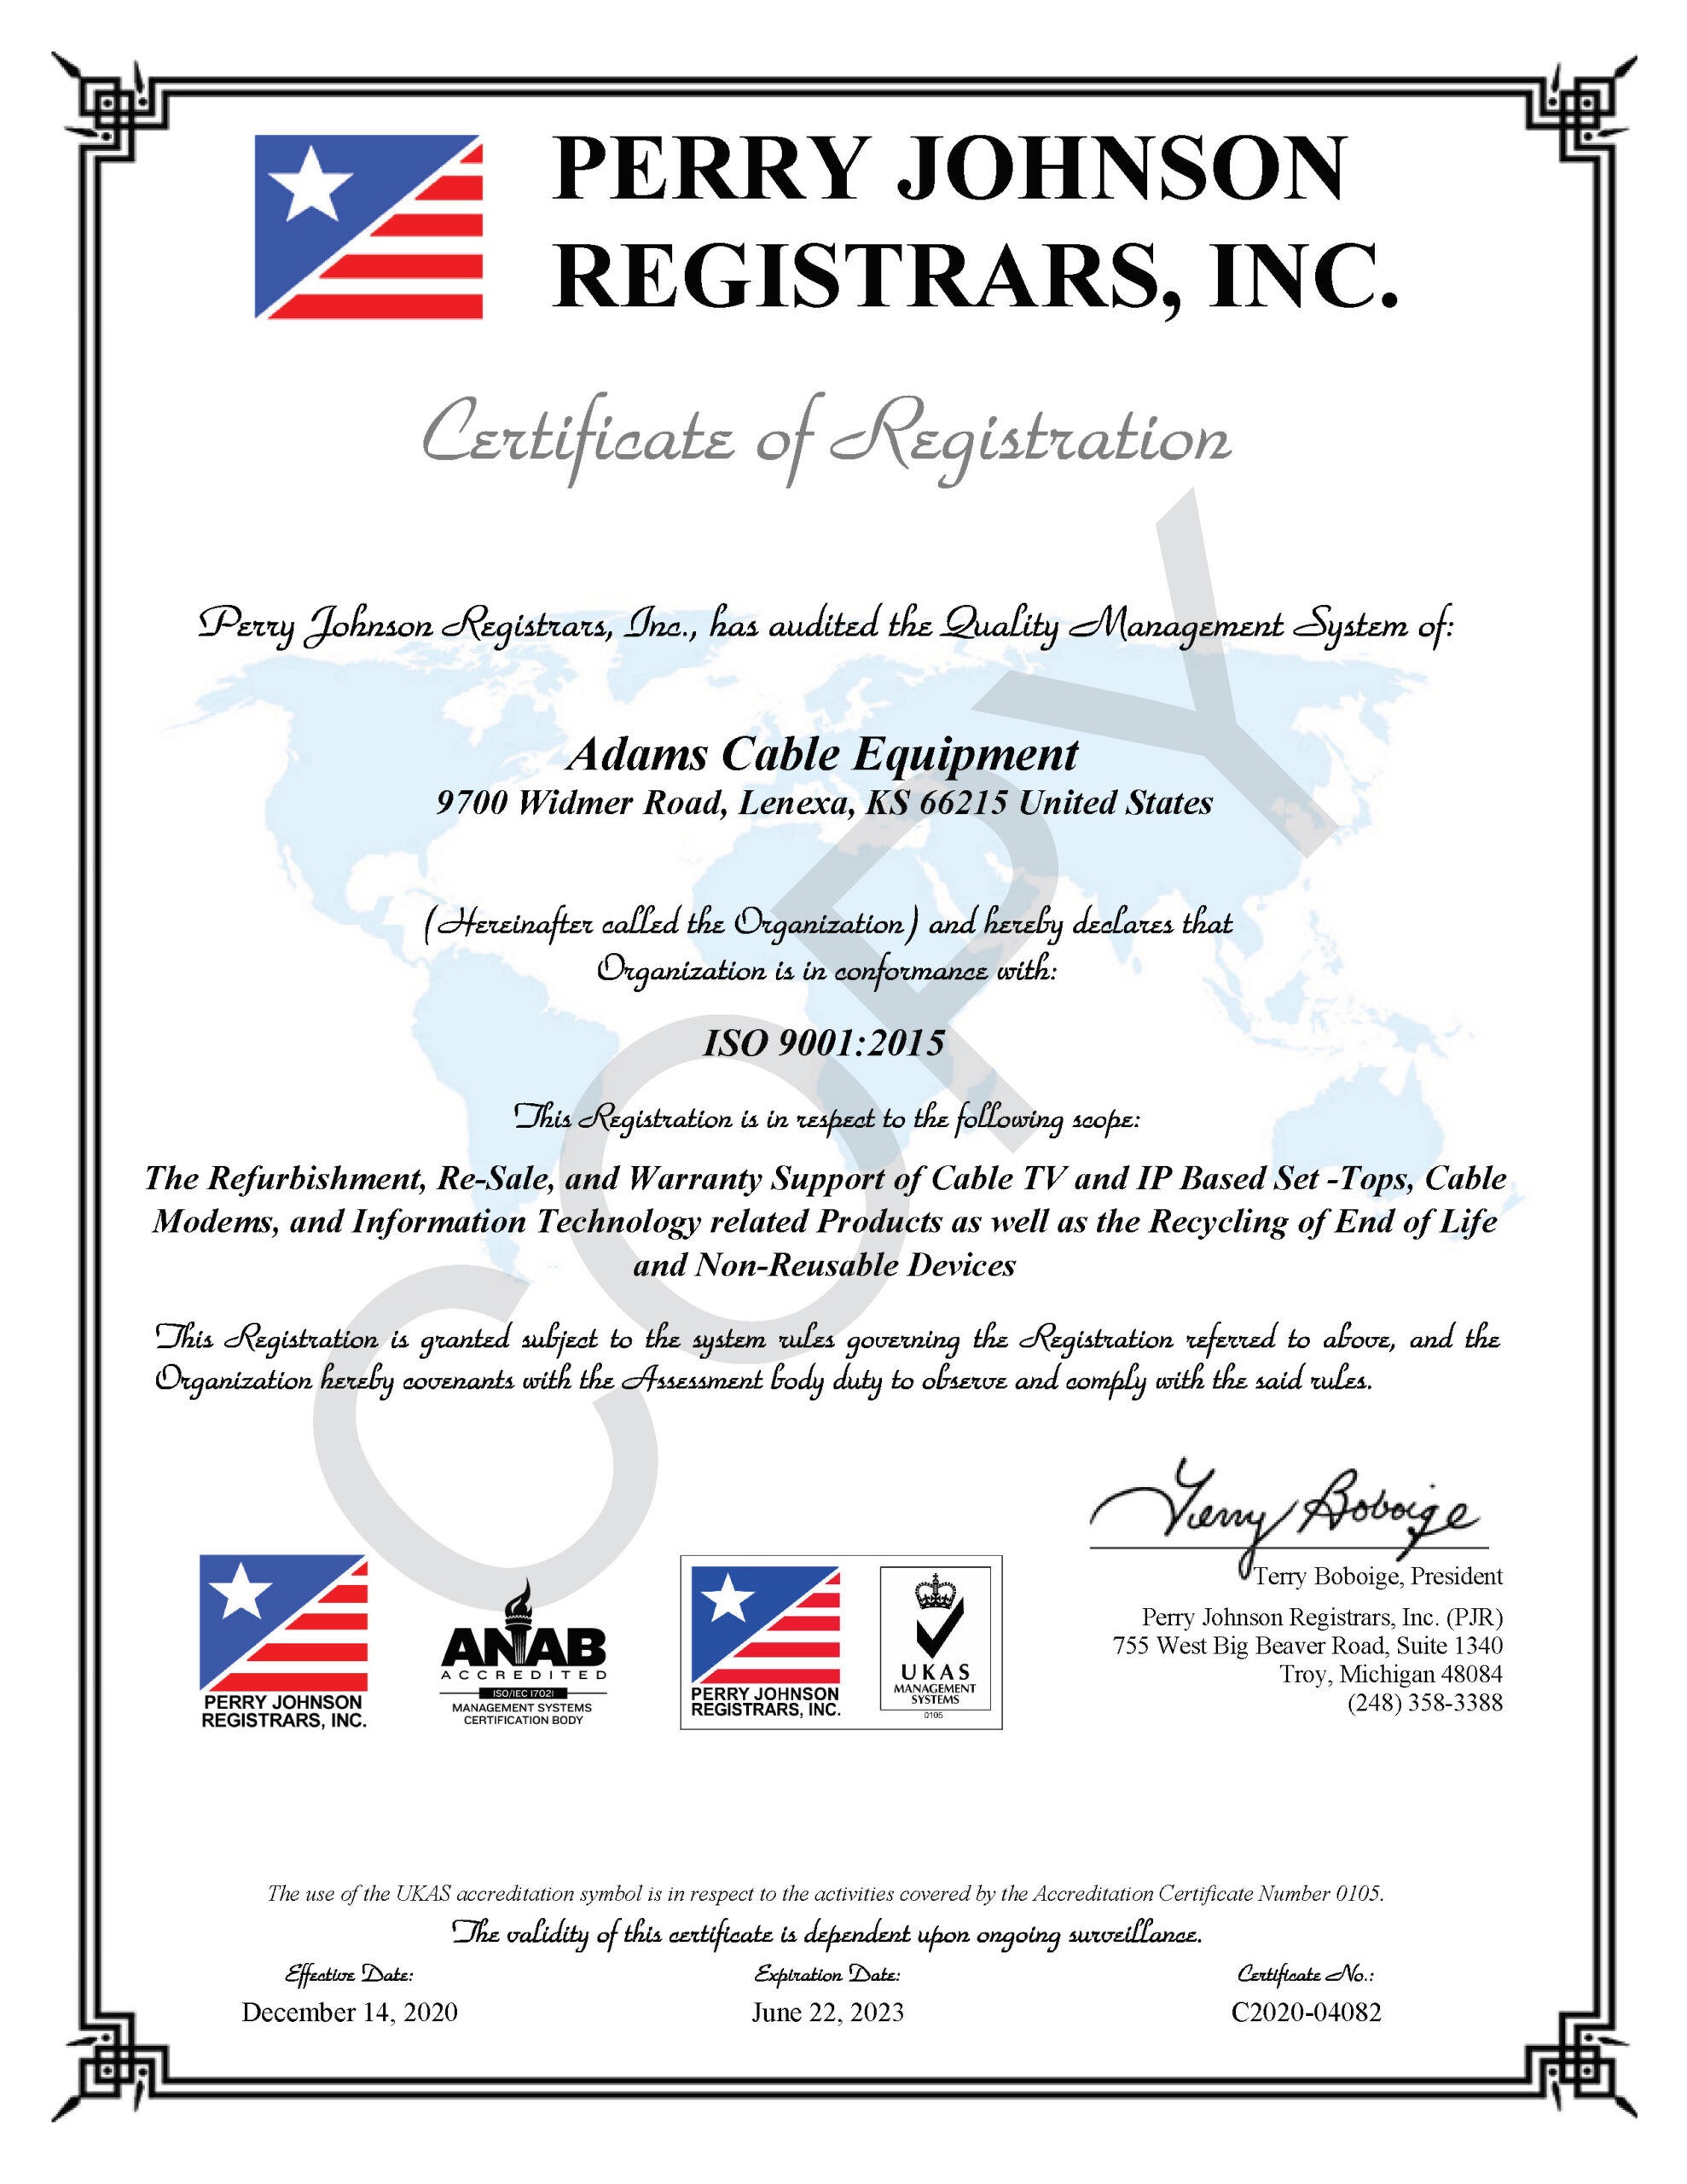 Adams Cable Equipment 9001 Certificate